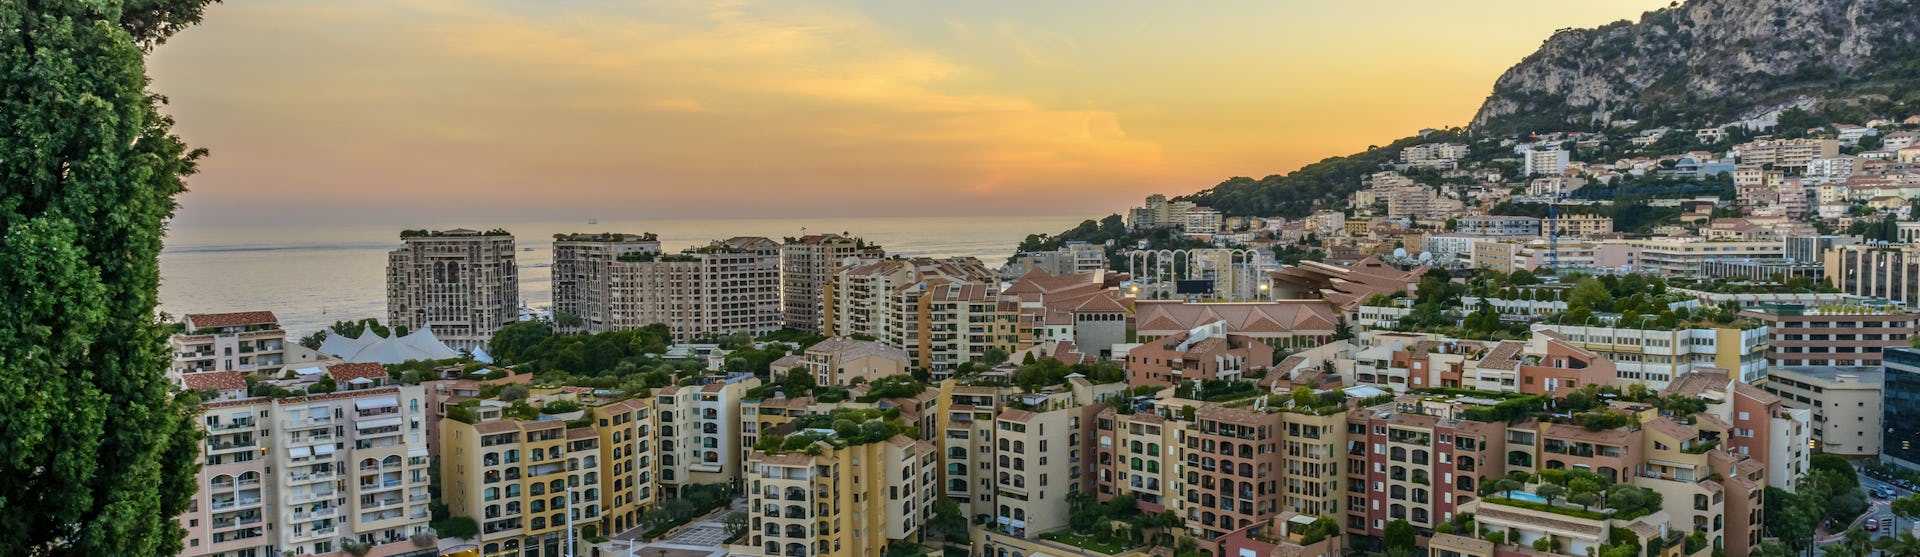 Monaco-French-Riviera-France-North-Europe